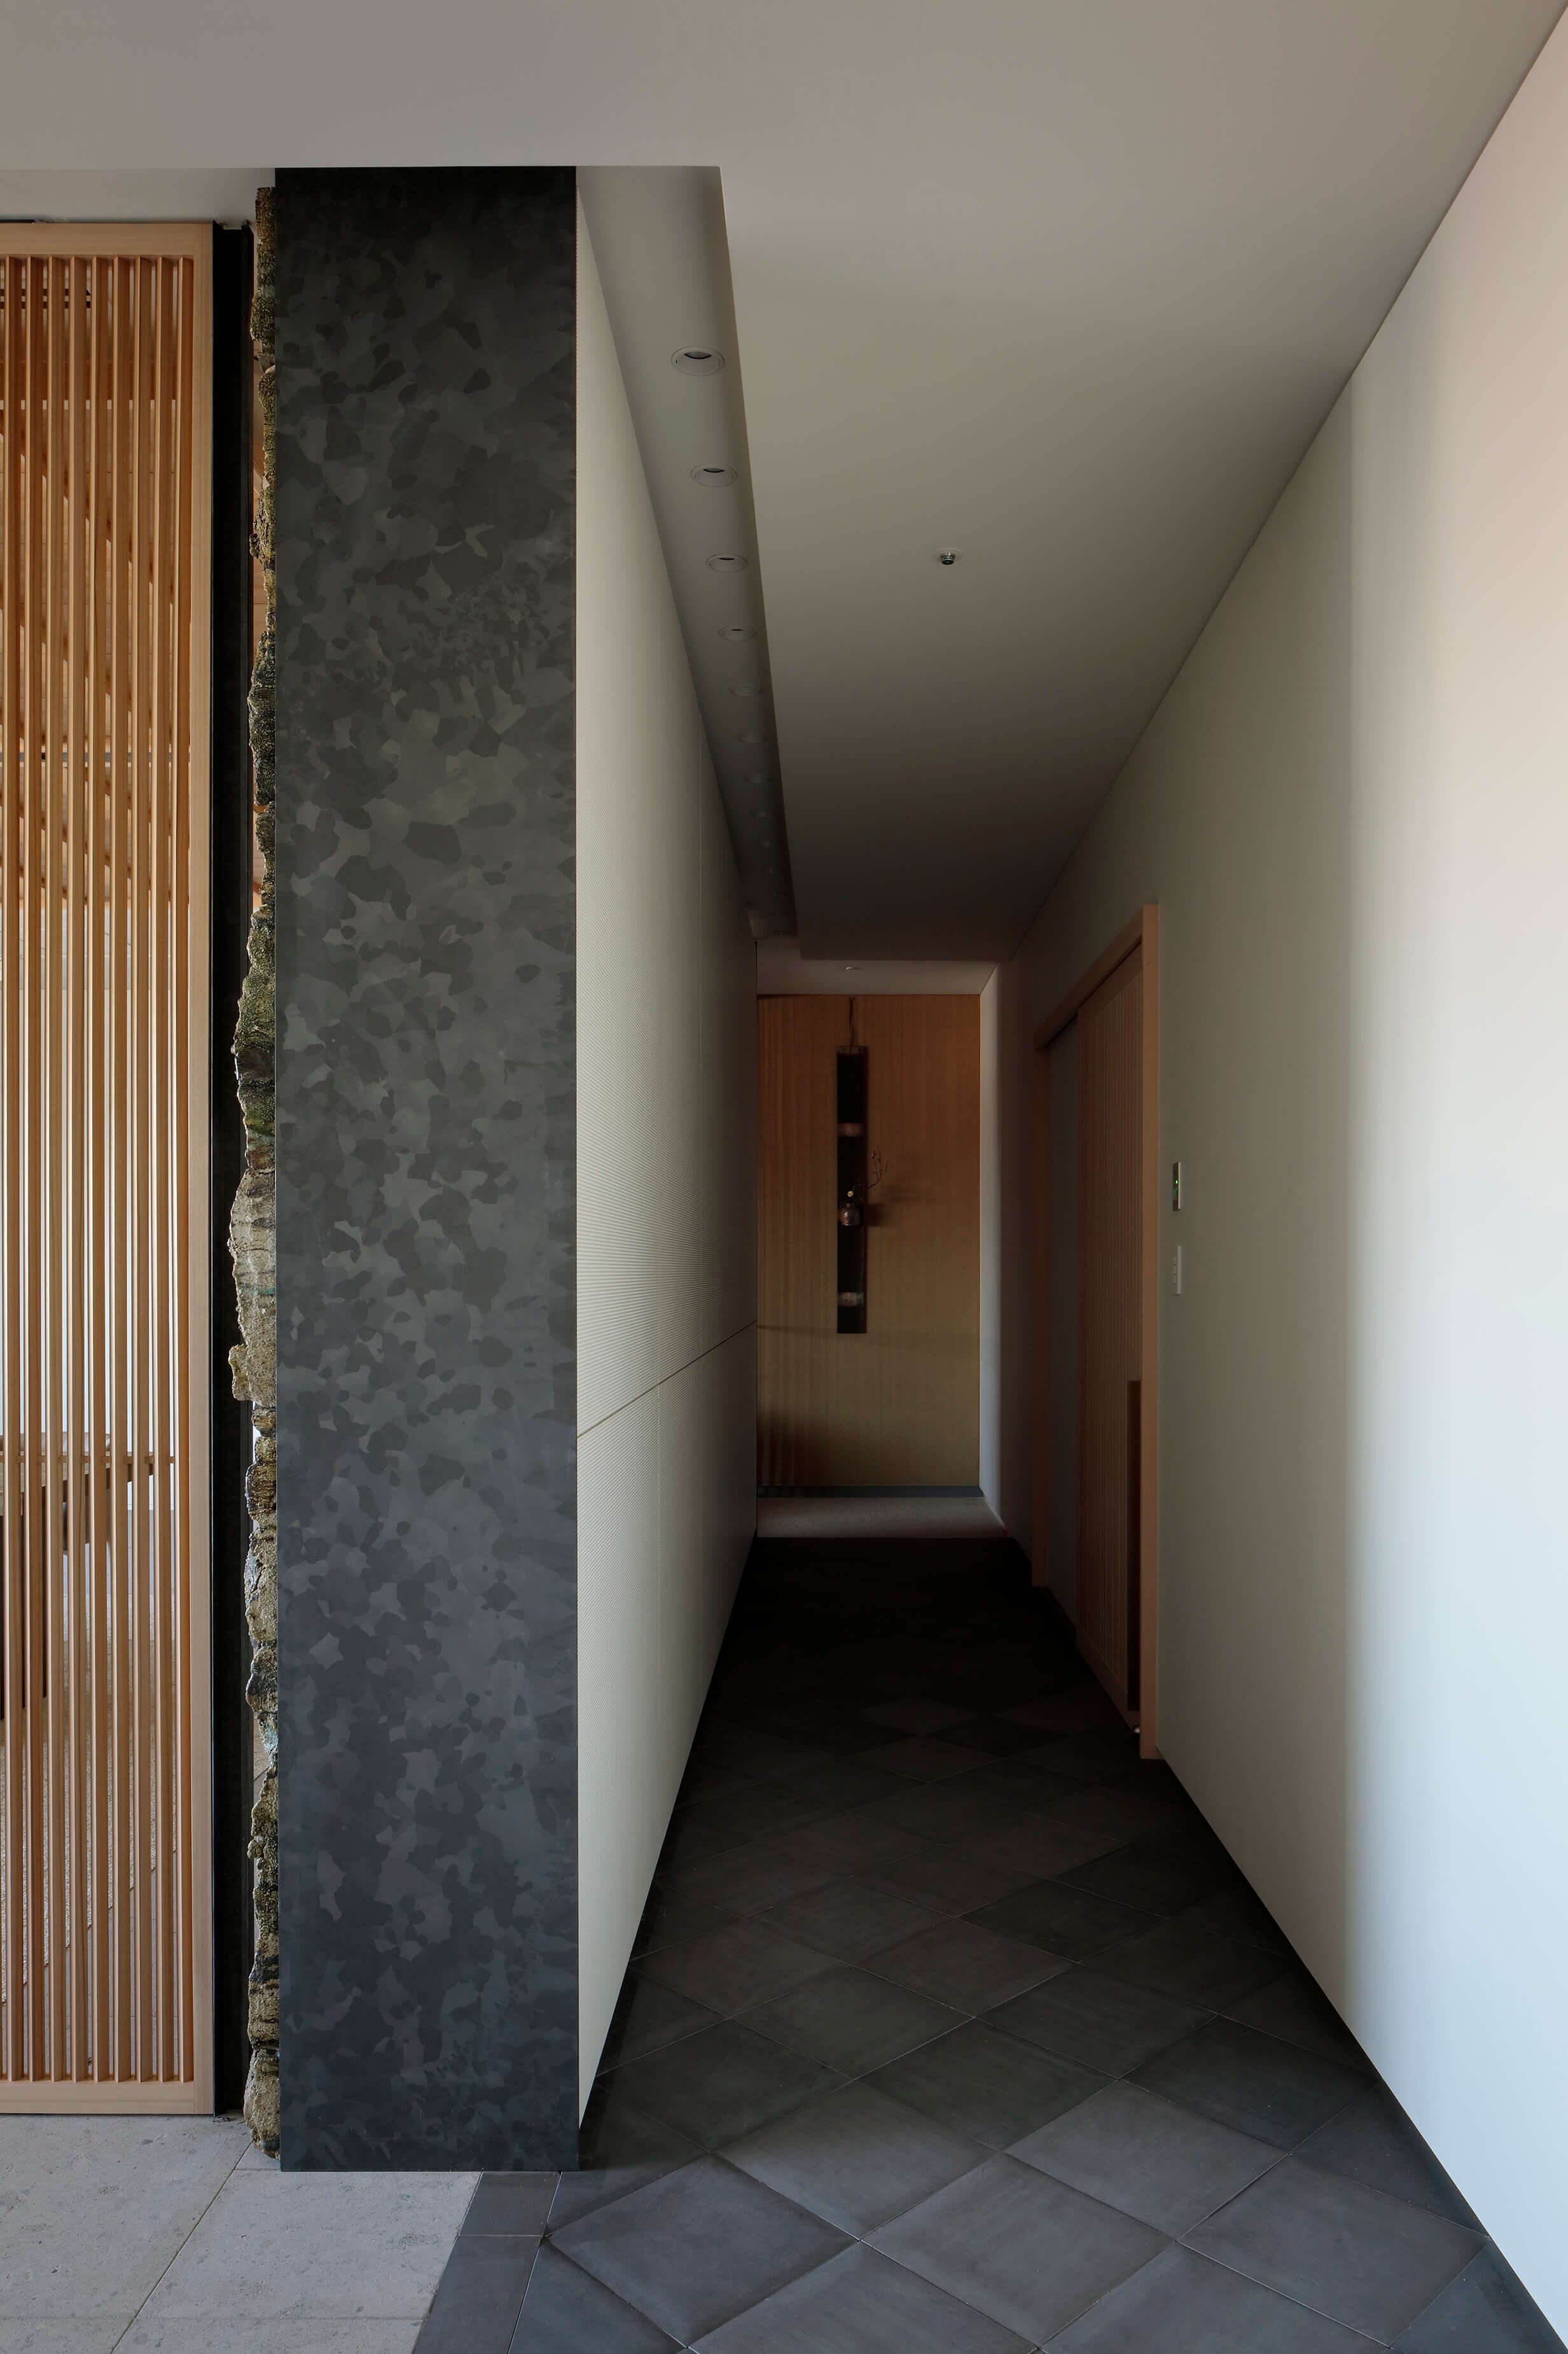 entrance passage of ntv project by tomoyuki sakakida architect in tokyo japan